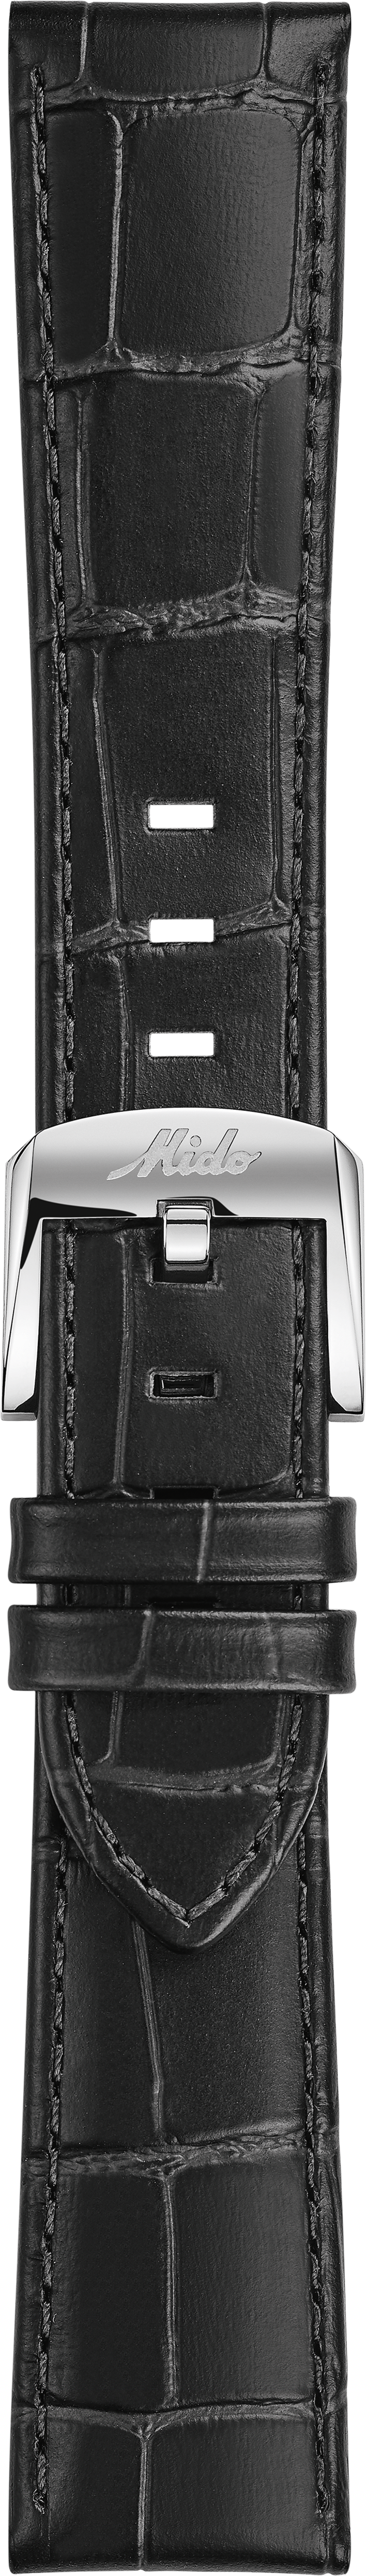 Mido Multifort black cowhide leather strap